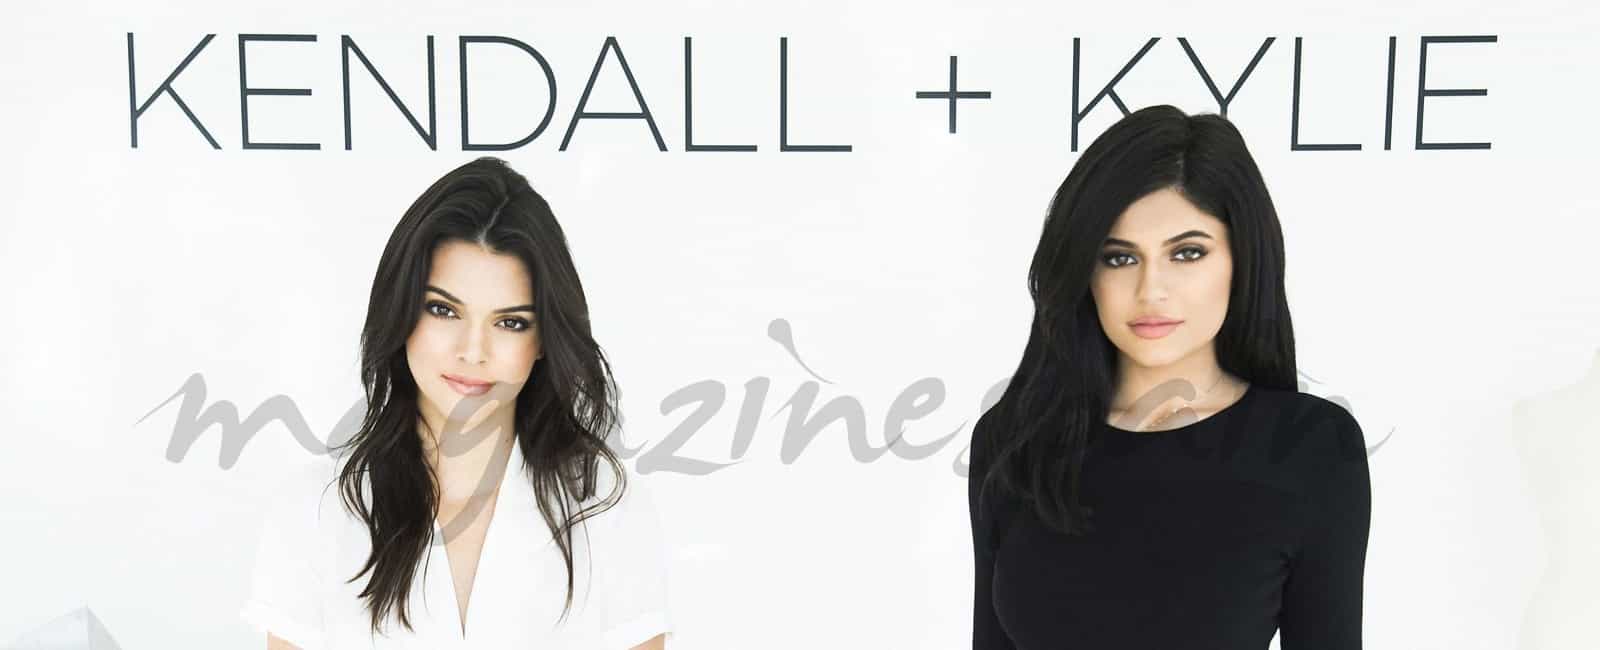 Kendall + Kylie Jenner: Colección Primavera 2016